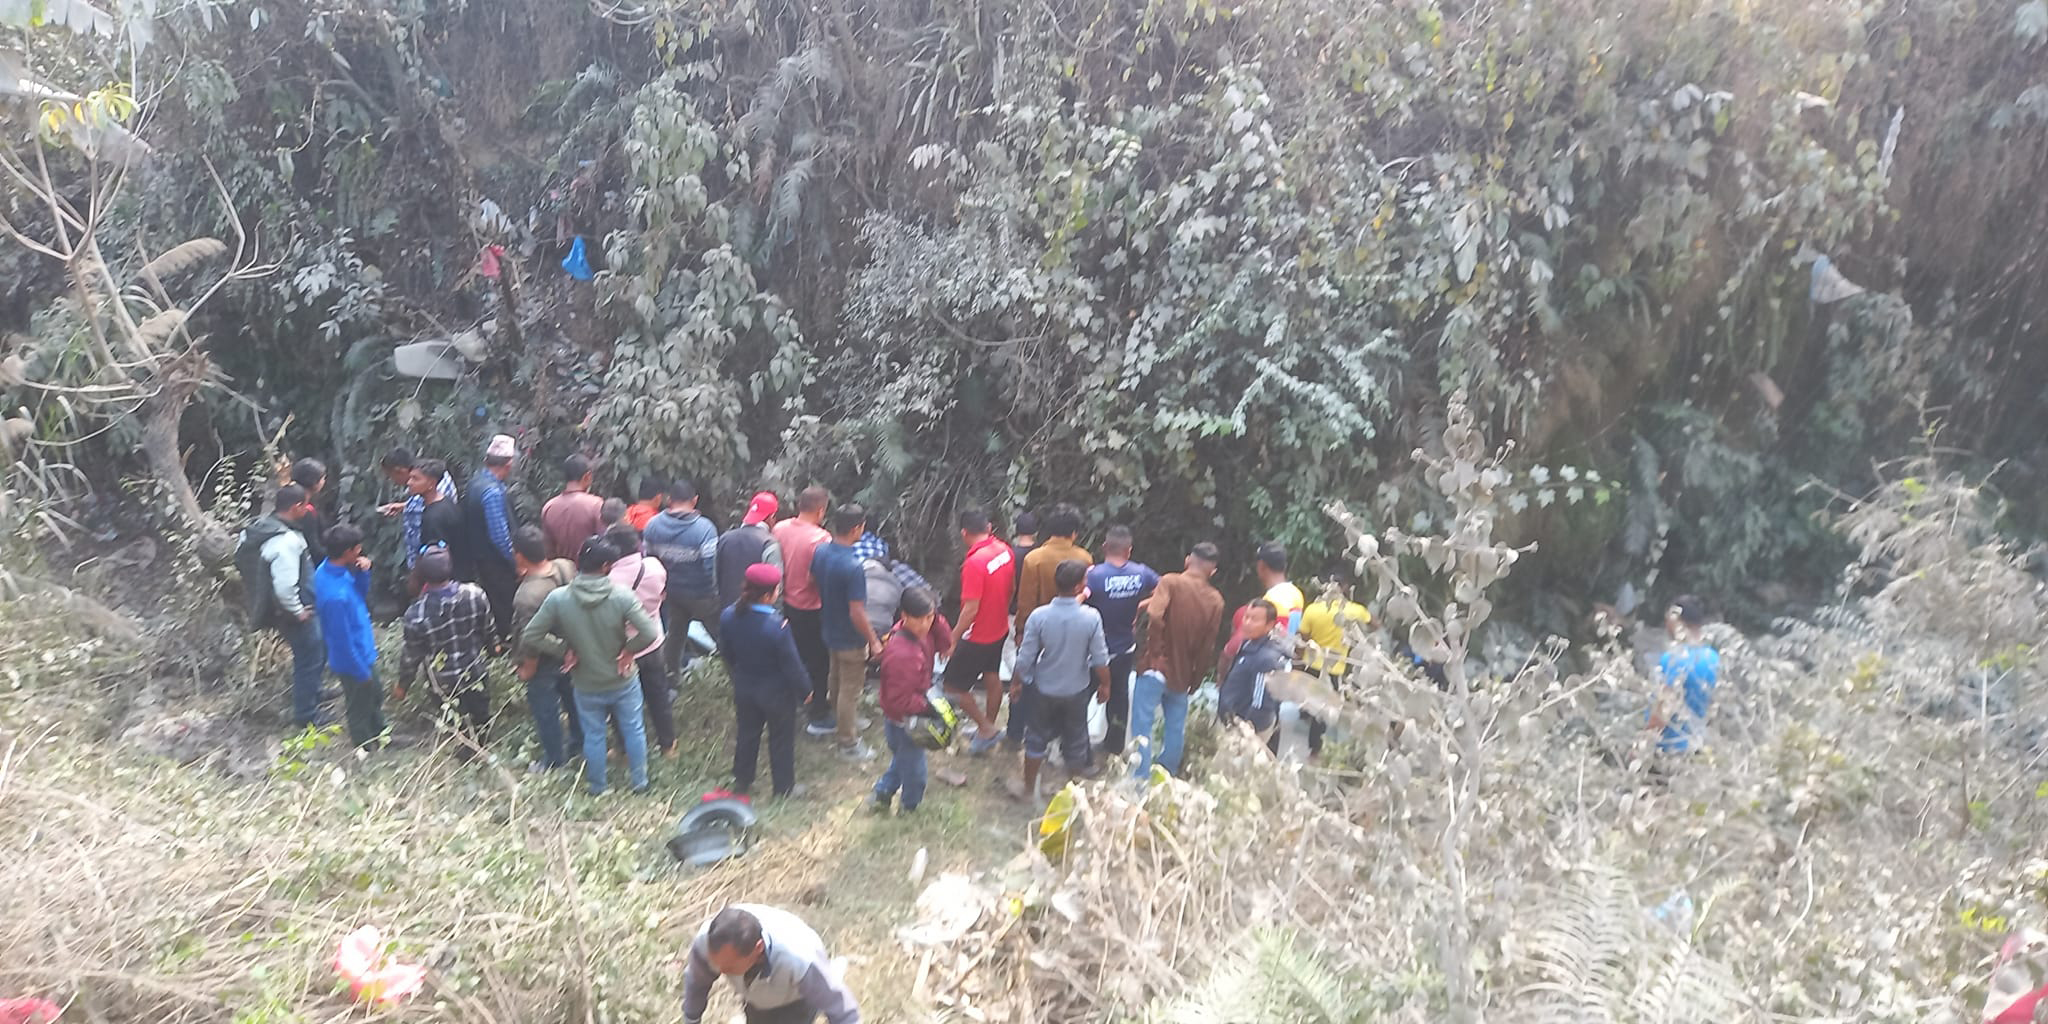 40 injured in Pokhara road mishap